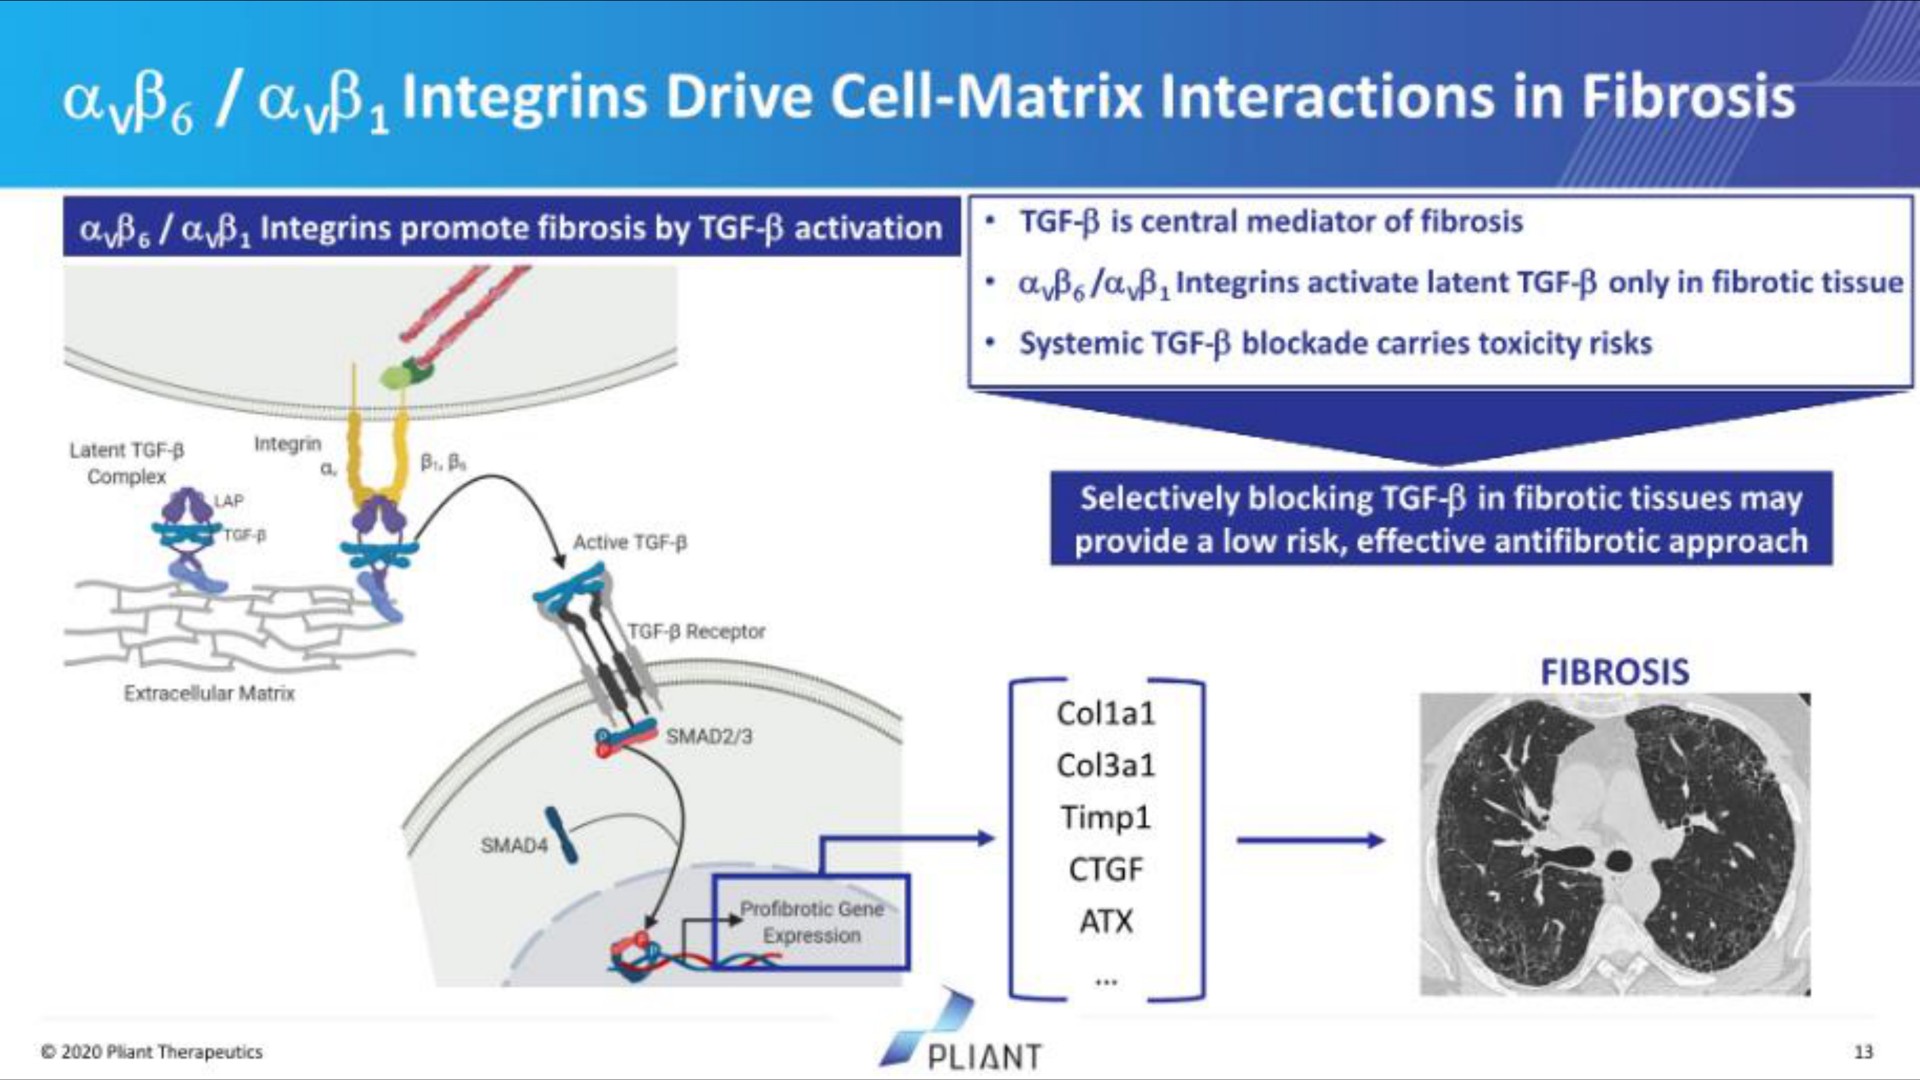 a drive cell matrix interactions in fibrosis | Pilant Therapeutics